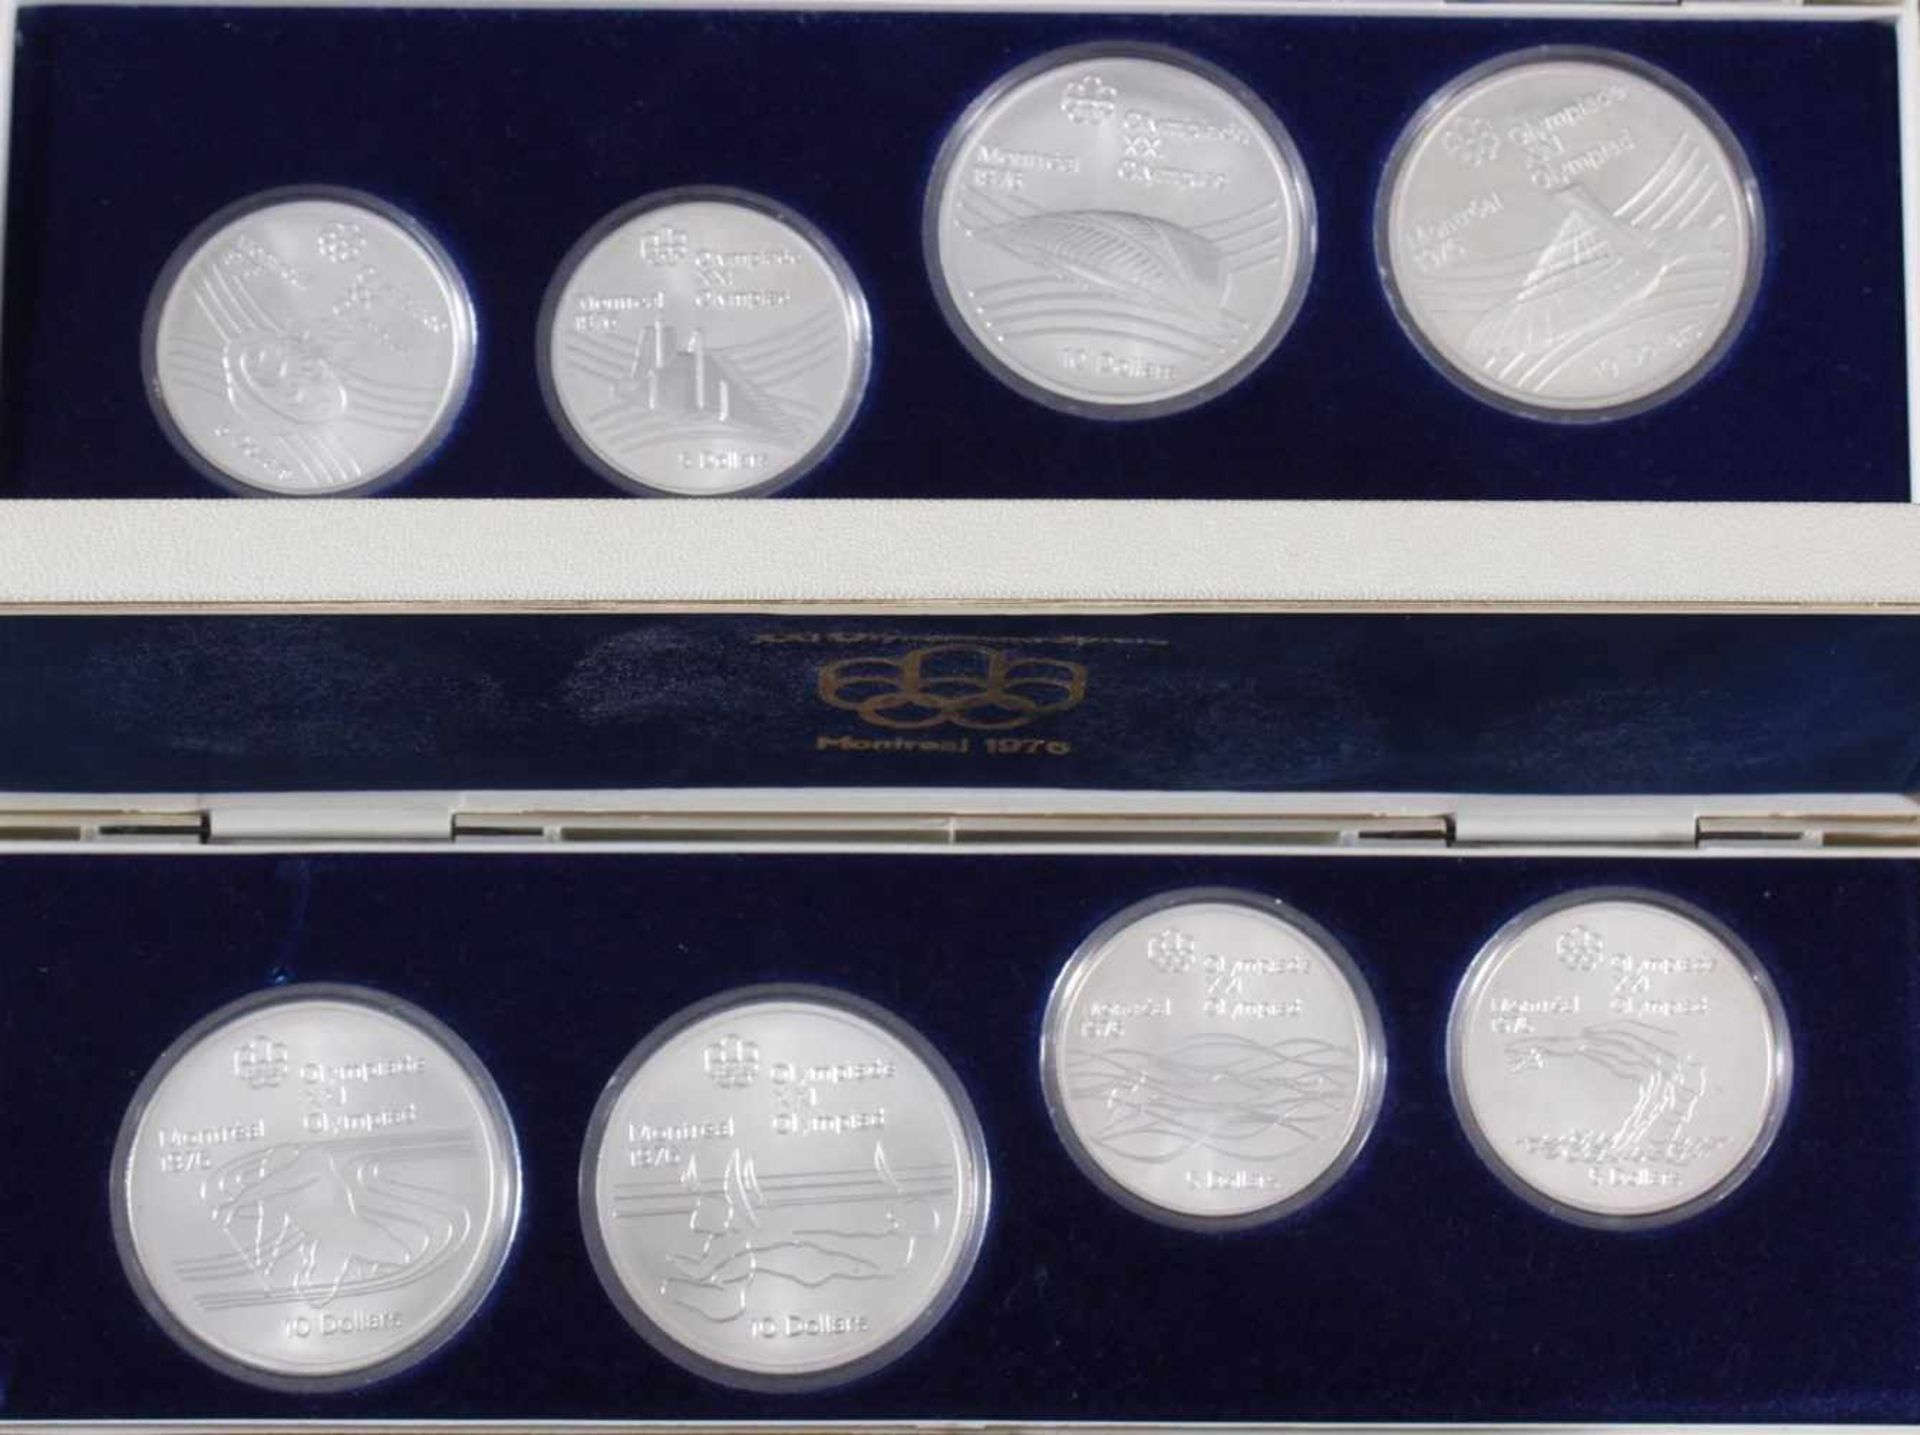 28x Silbermünzen Montreal 1976, kompletter Satz< - Image 3 of 5